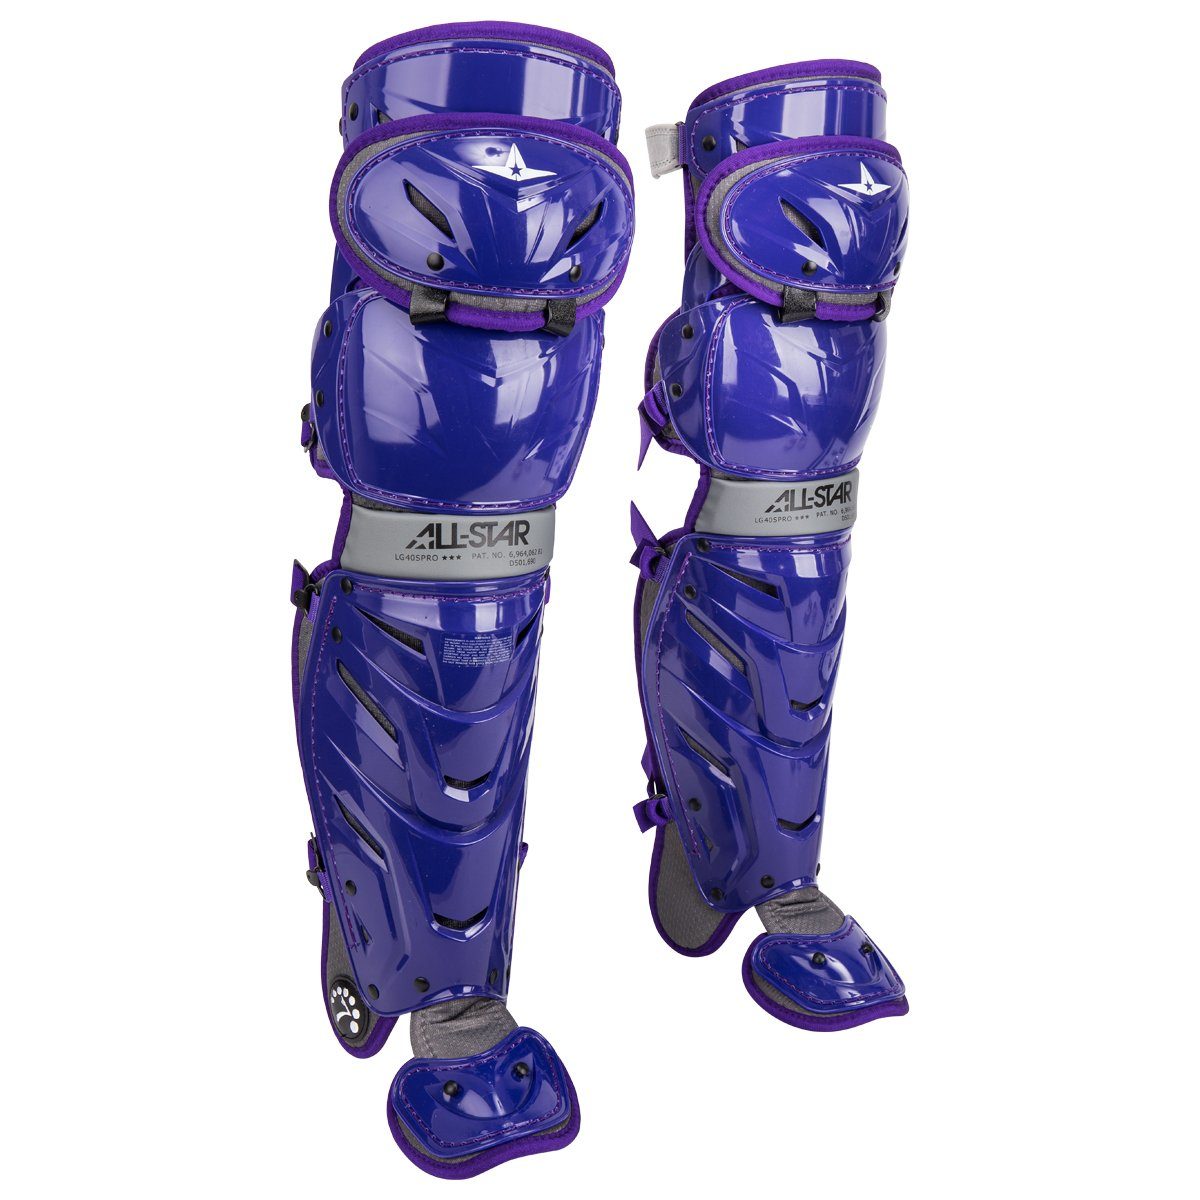 All-Star Lg40Spro System 7 Intermediate Baseball Catcher's Leg Guards | Purple/Graphite